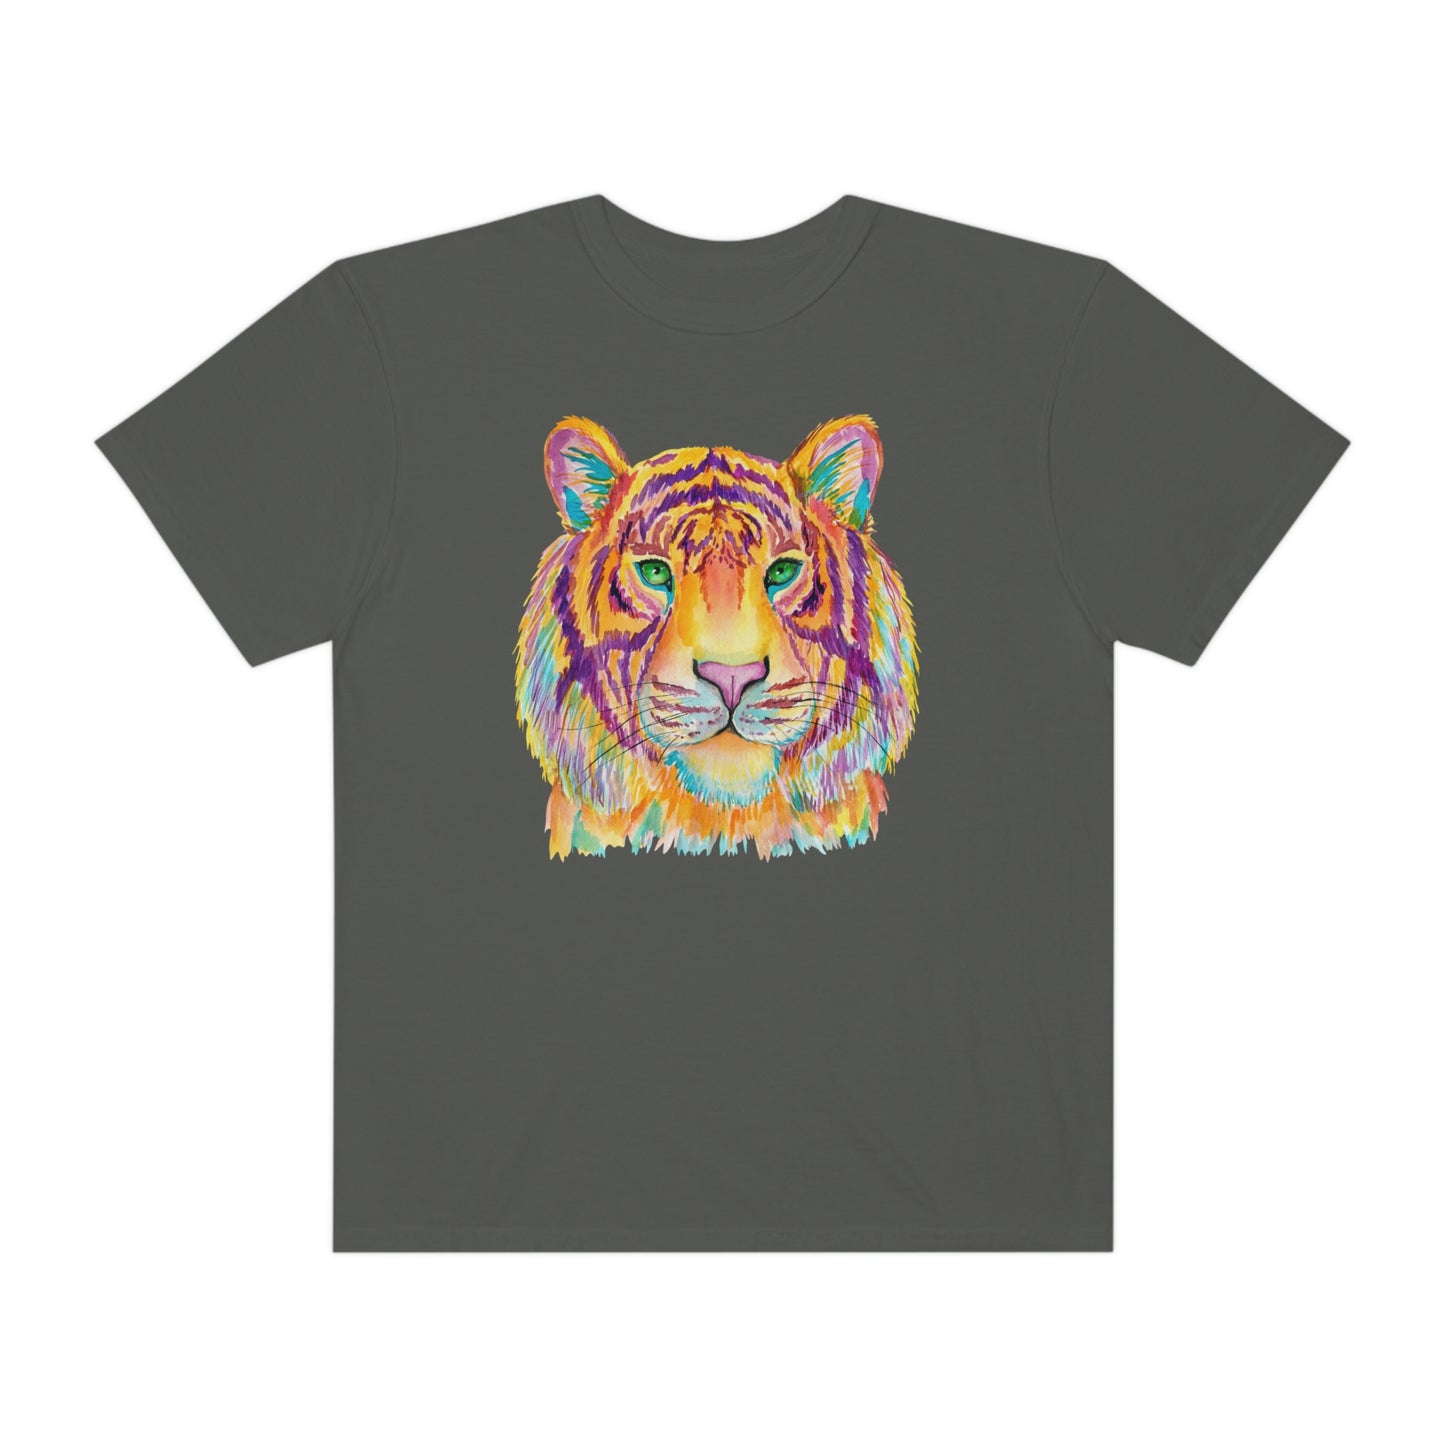 Tiger Face Game Day Shirt